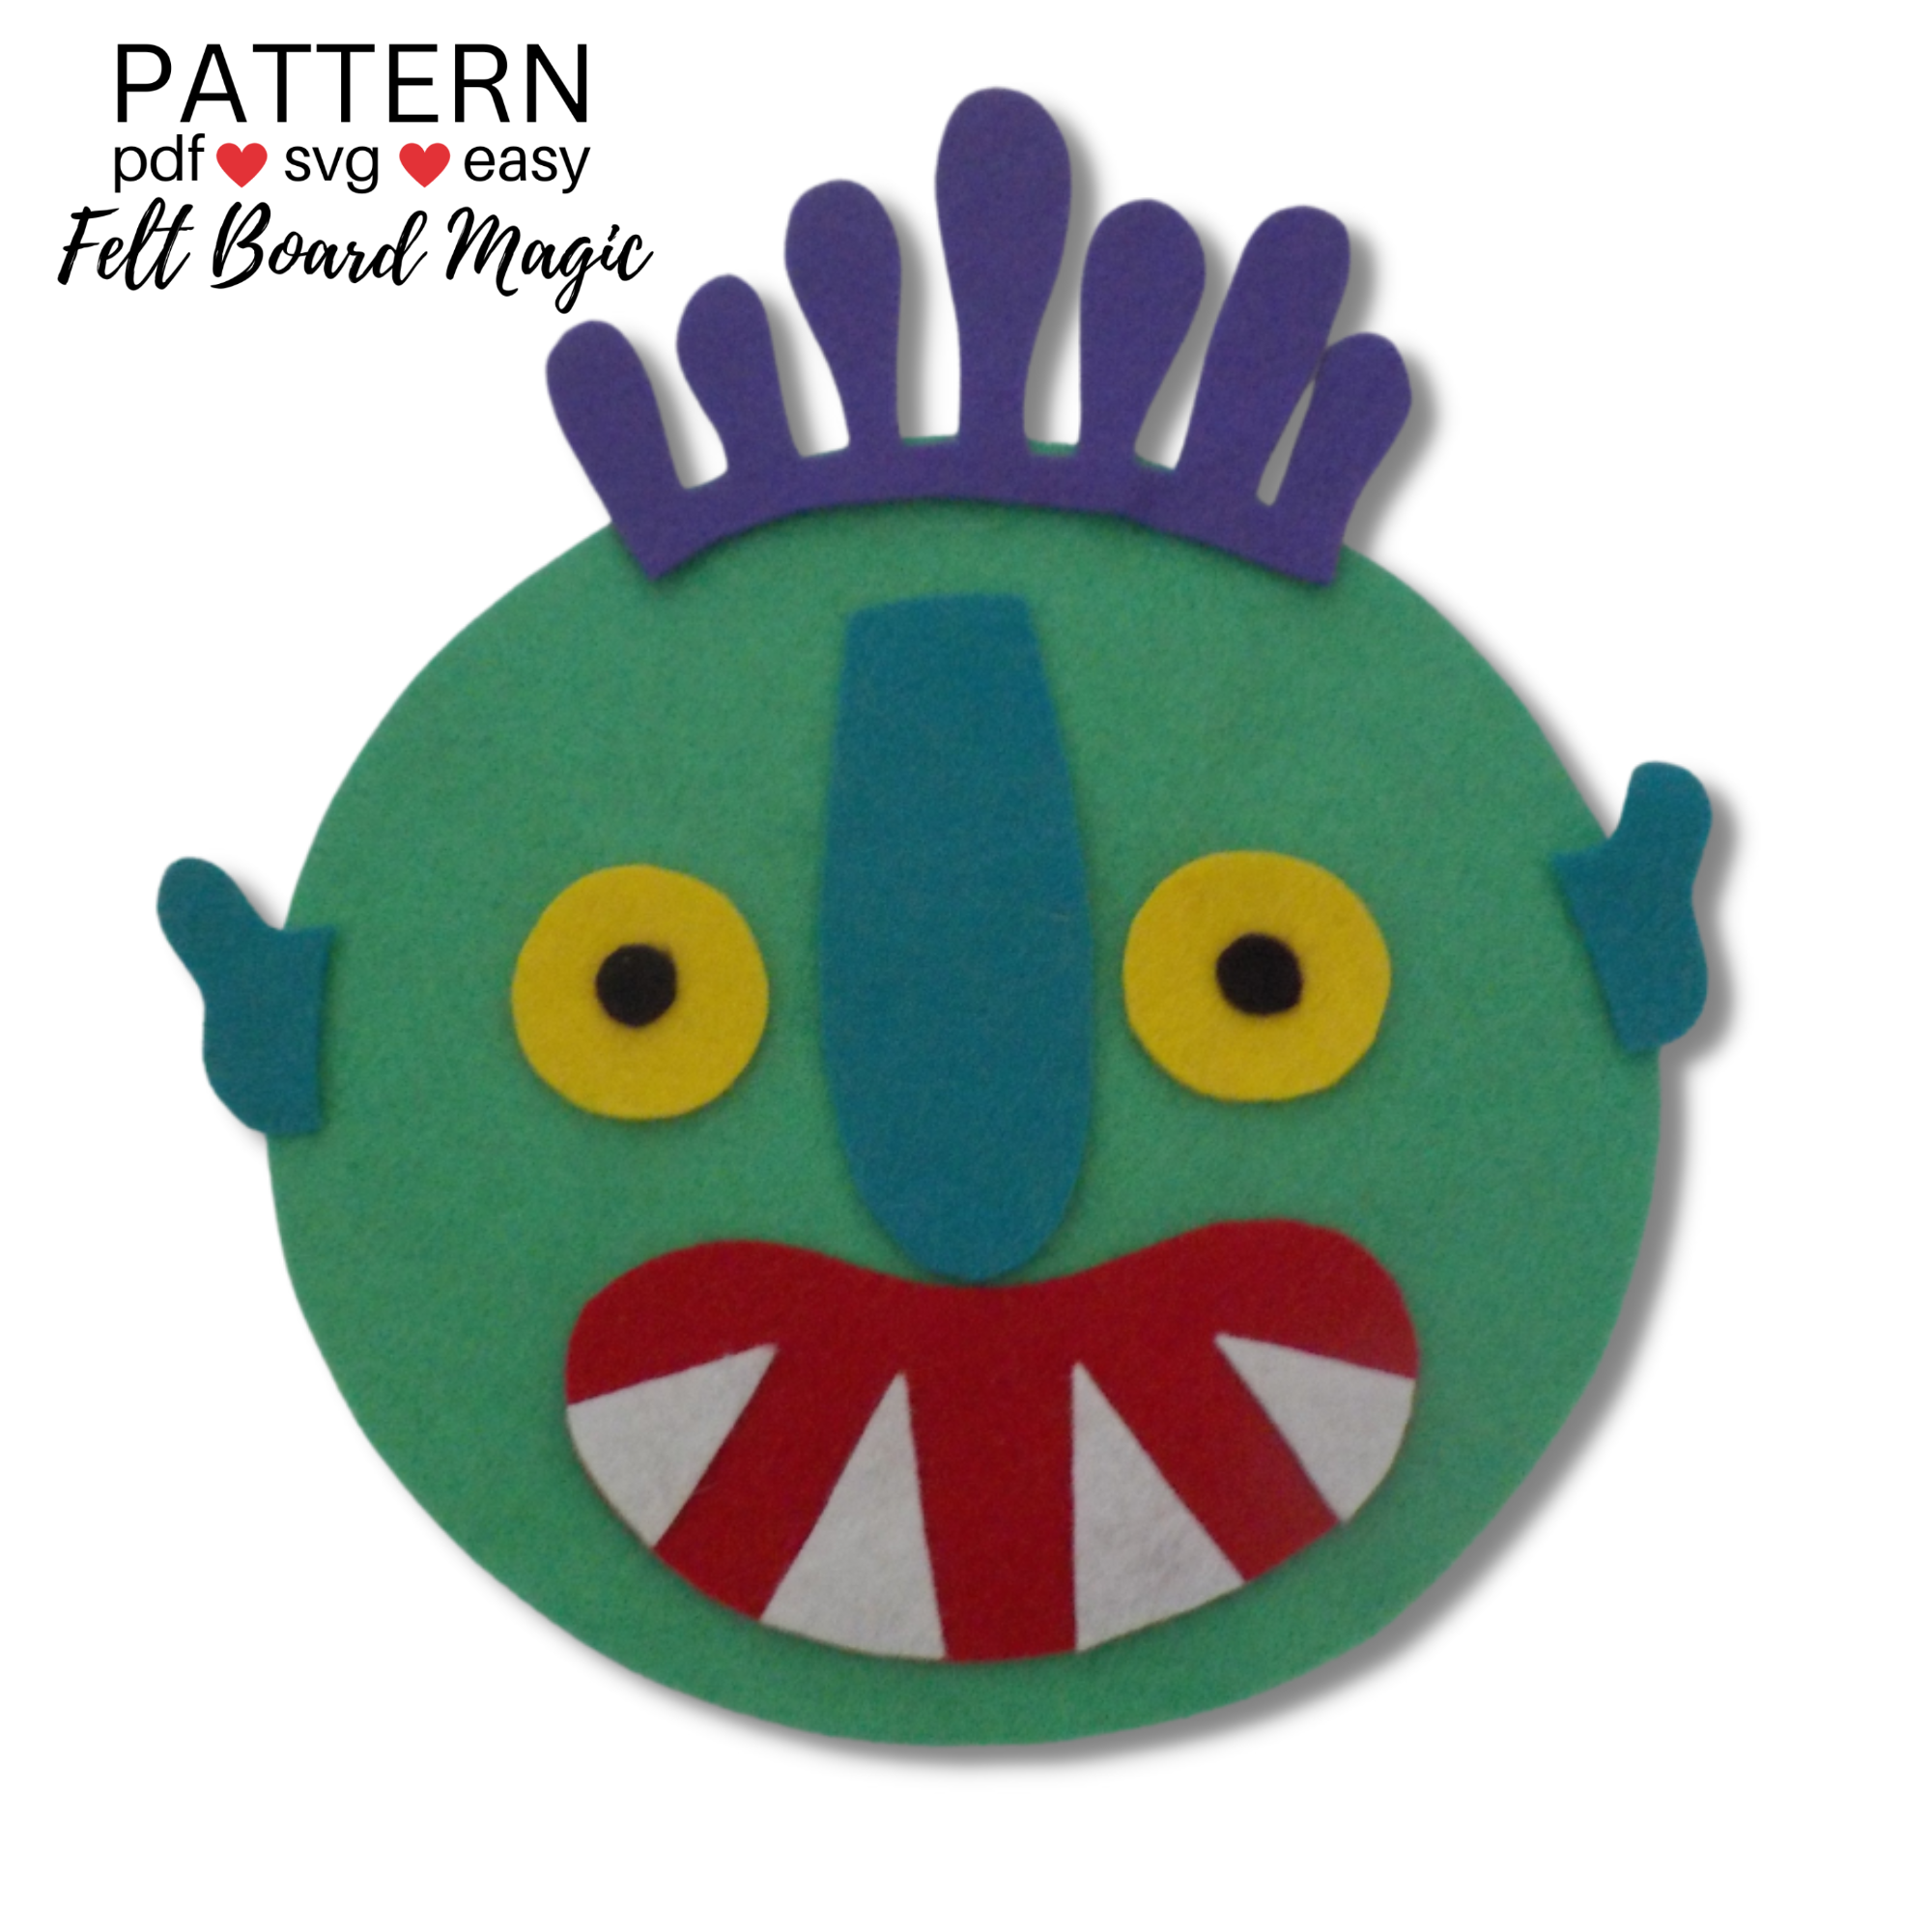 Go Away Big Green Monster Felt Set Pattern – Felt Board Magic